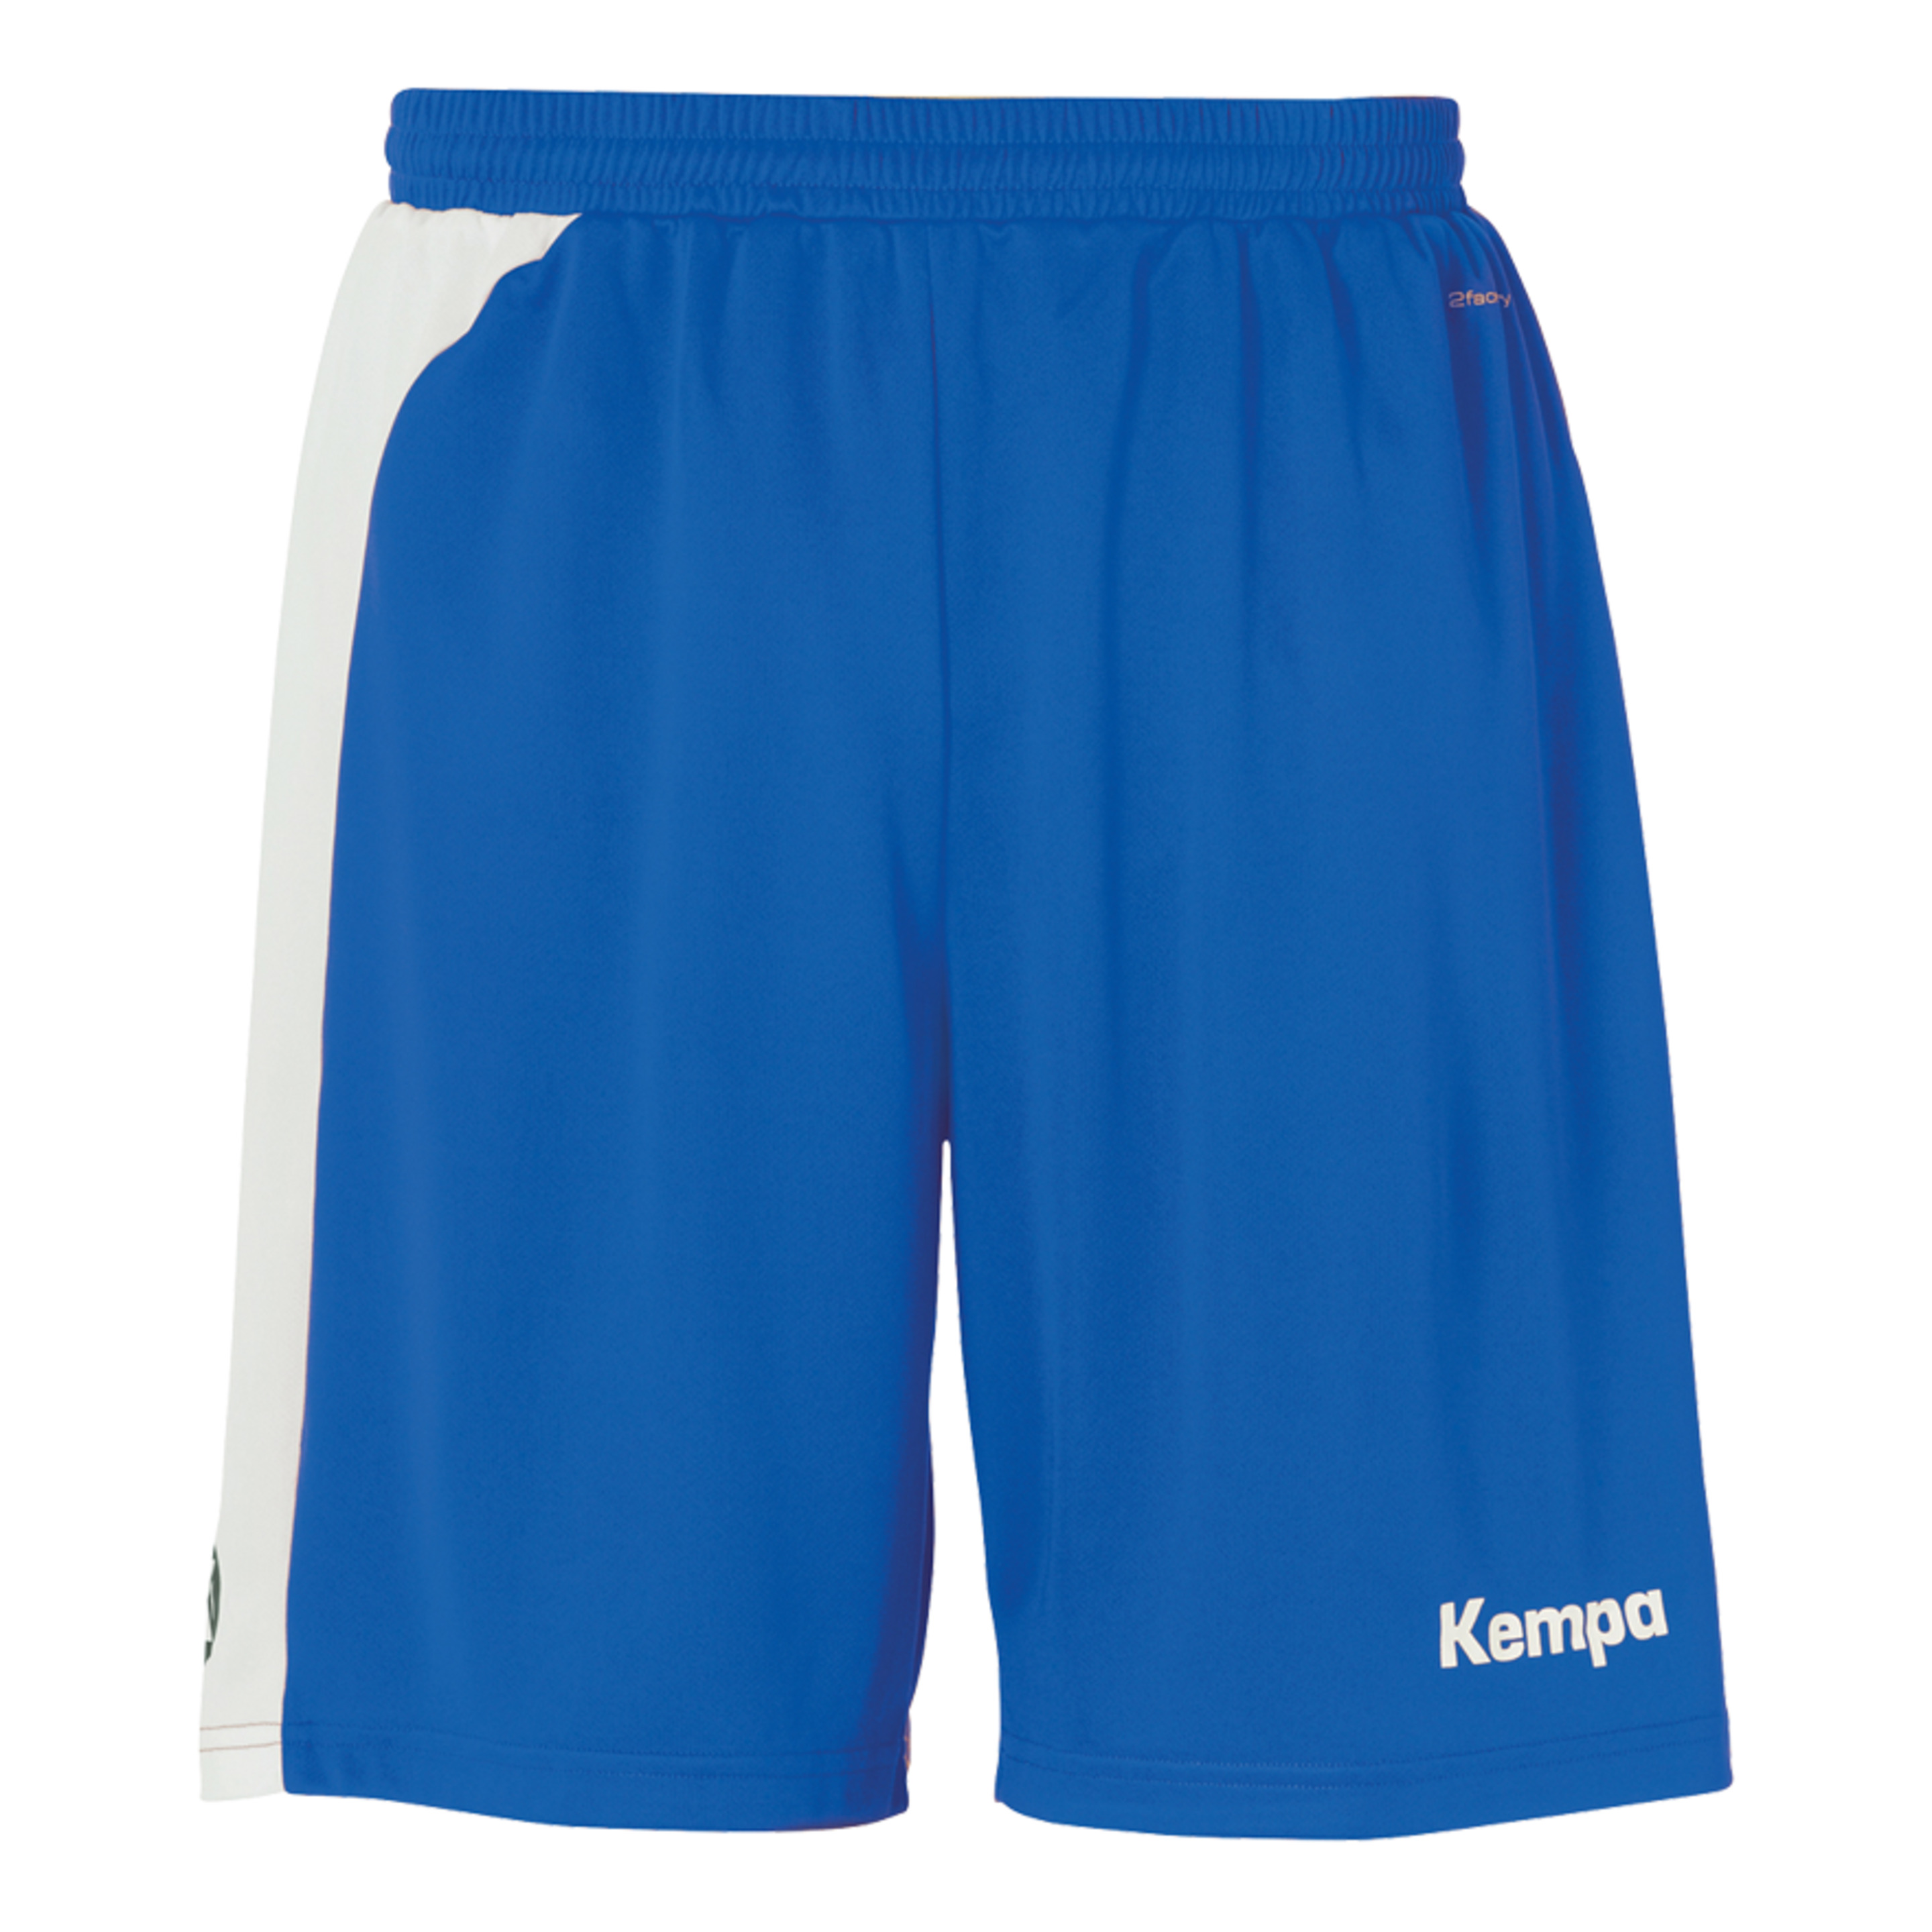 Peak Shorts Azul Royal/blanco Kempa - azul - 